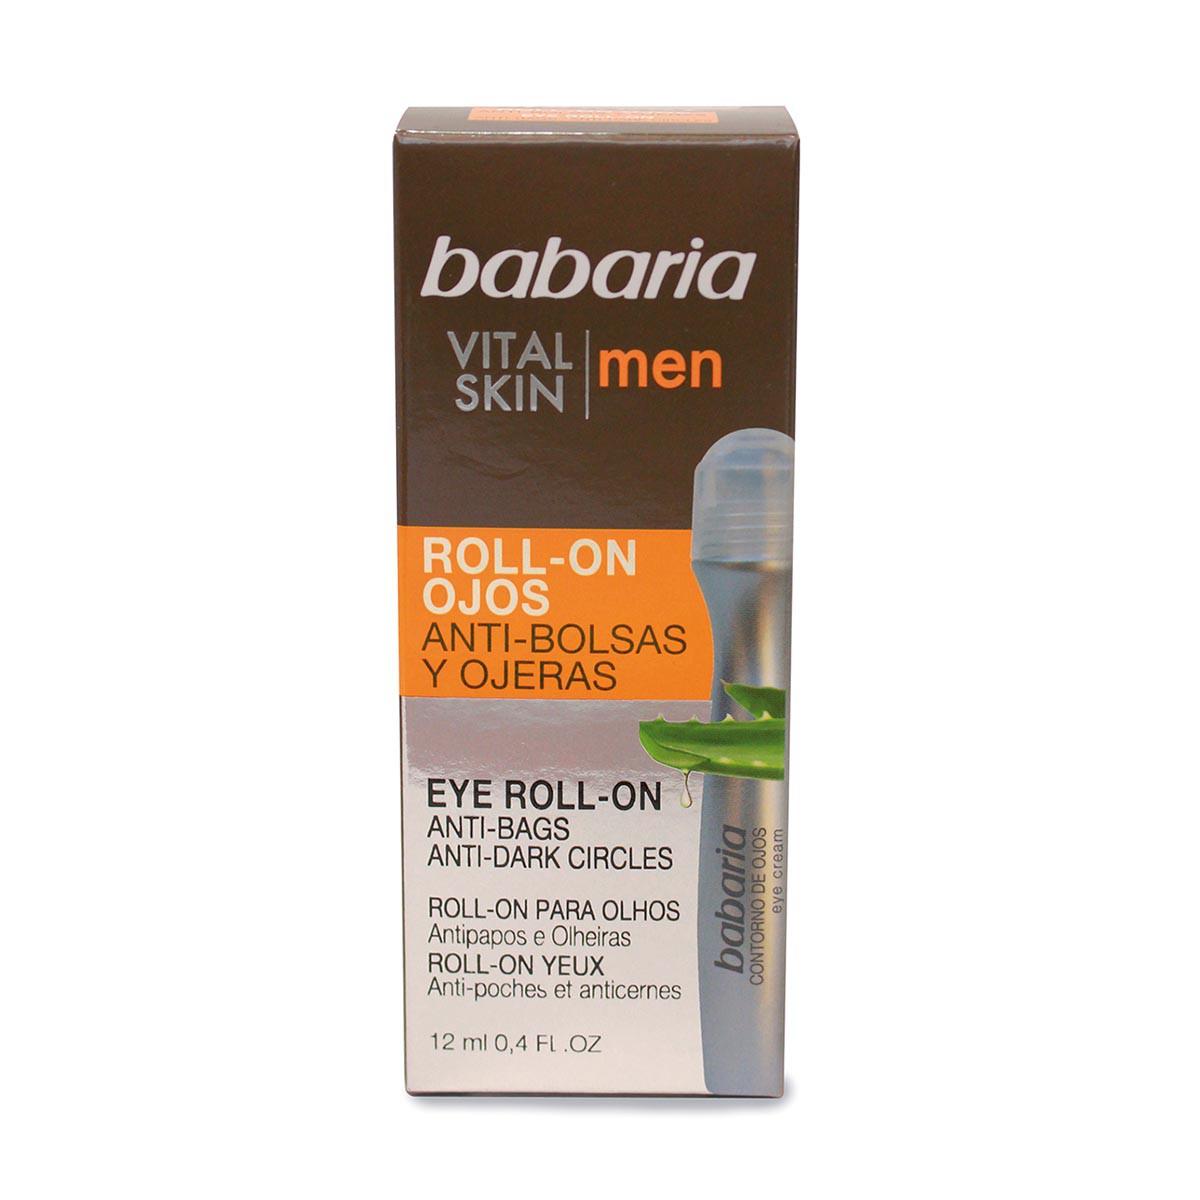 babaria-men-vital-skin-eye-rollon-anti-dark-circles-12ml